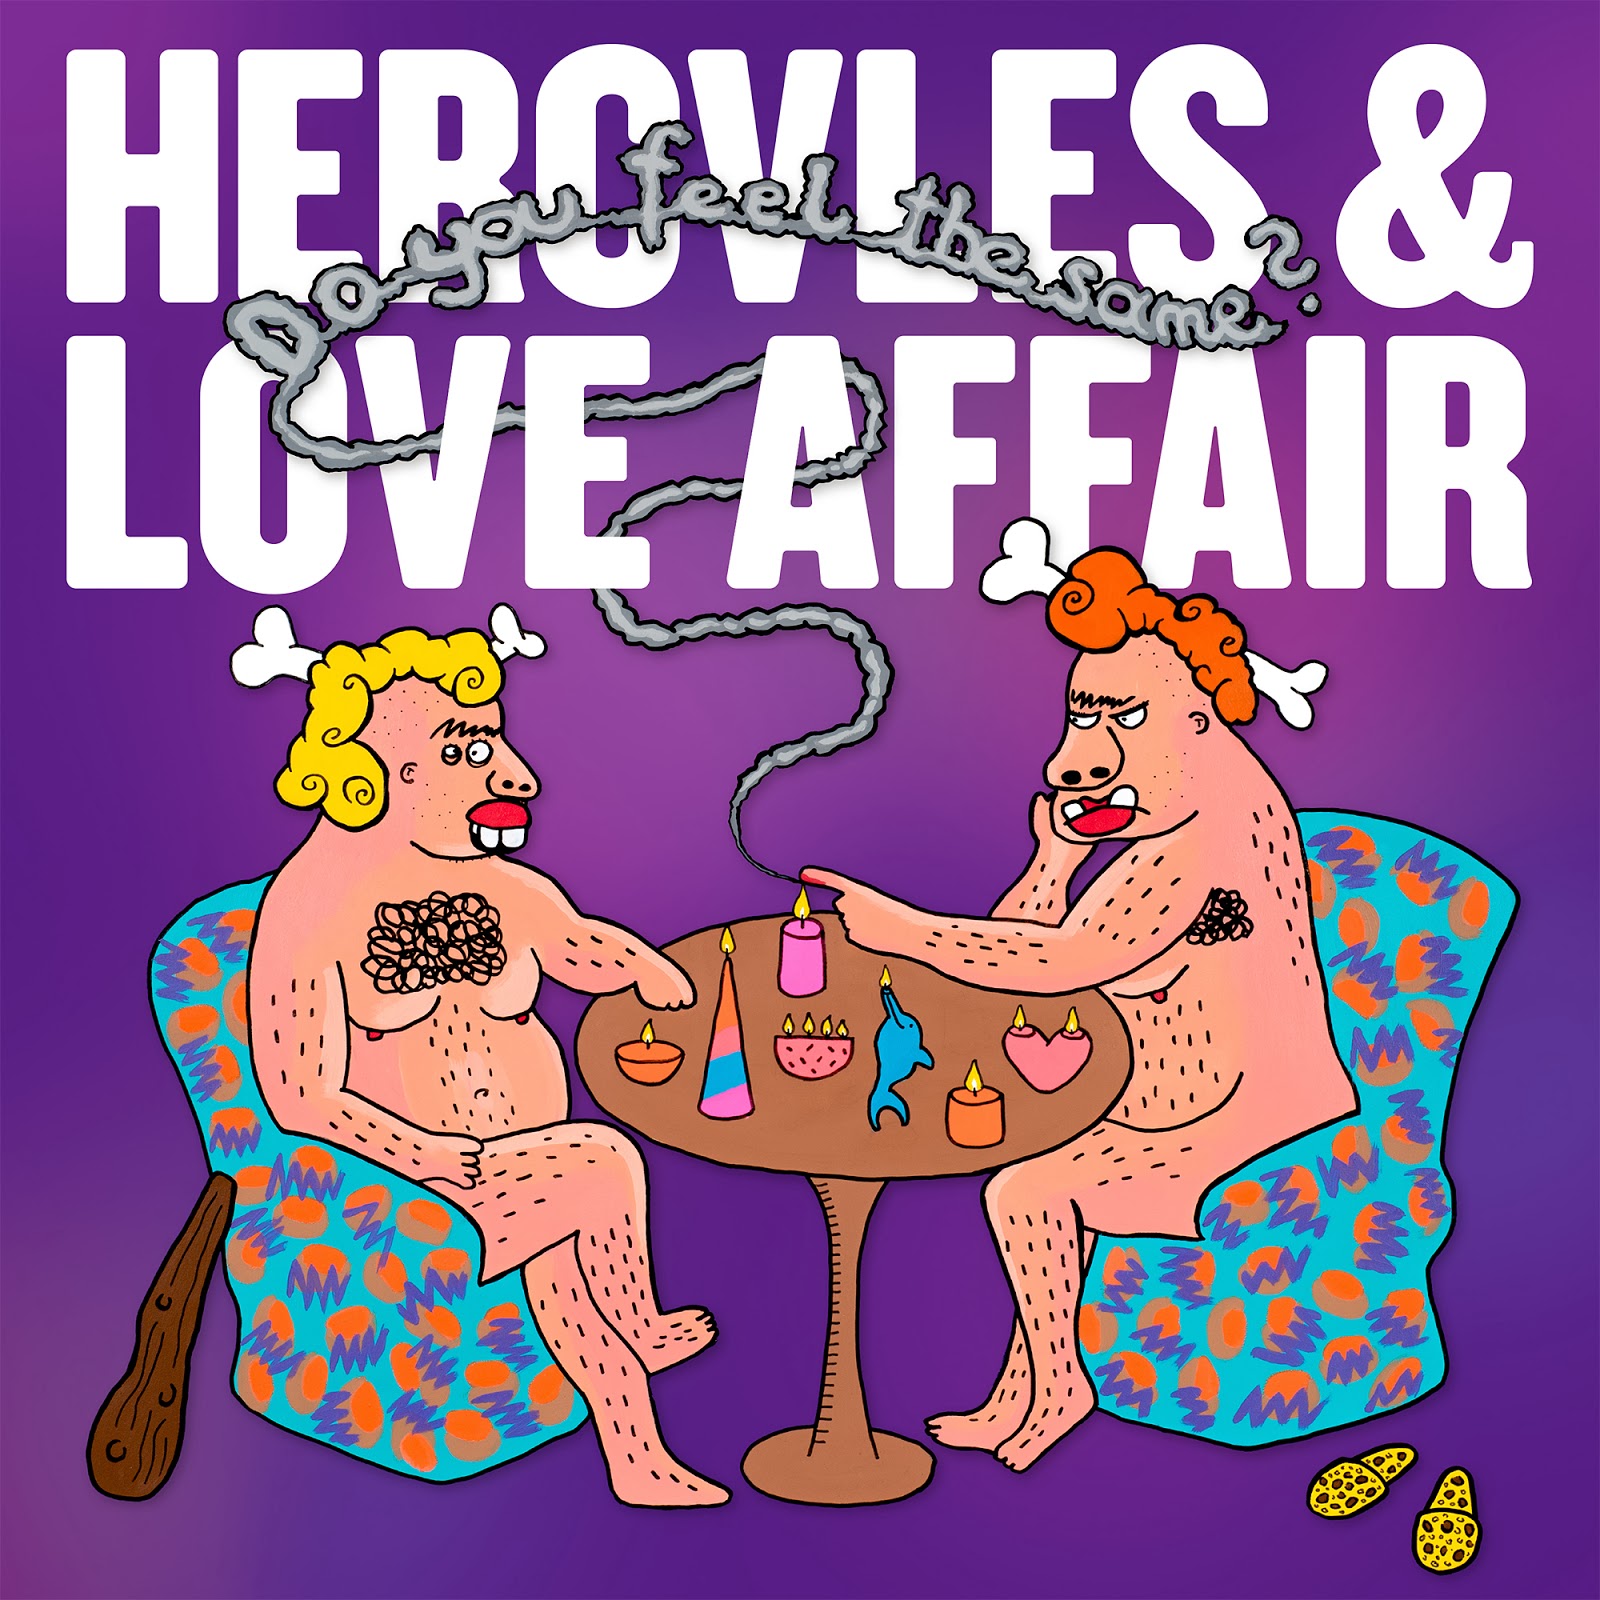 HERCULES & LOVE AFFAIR: DO YOU FEEL THE SAME?